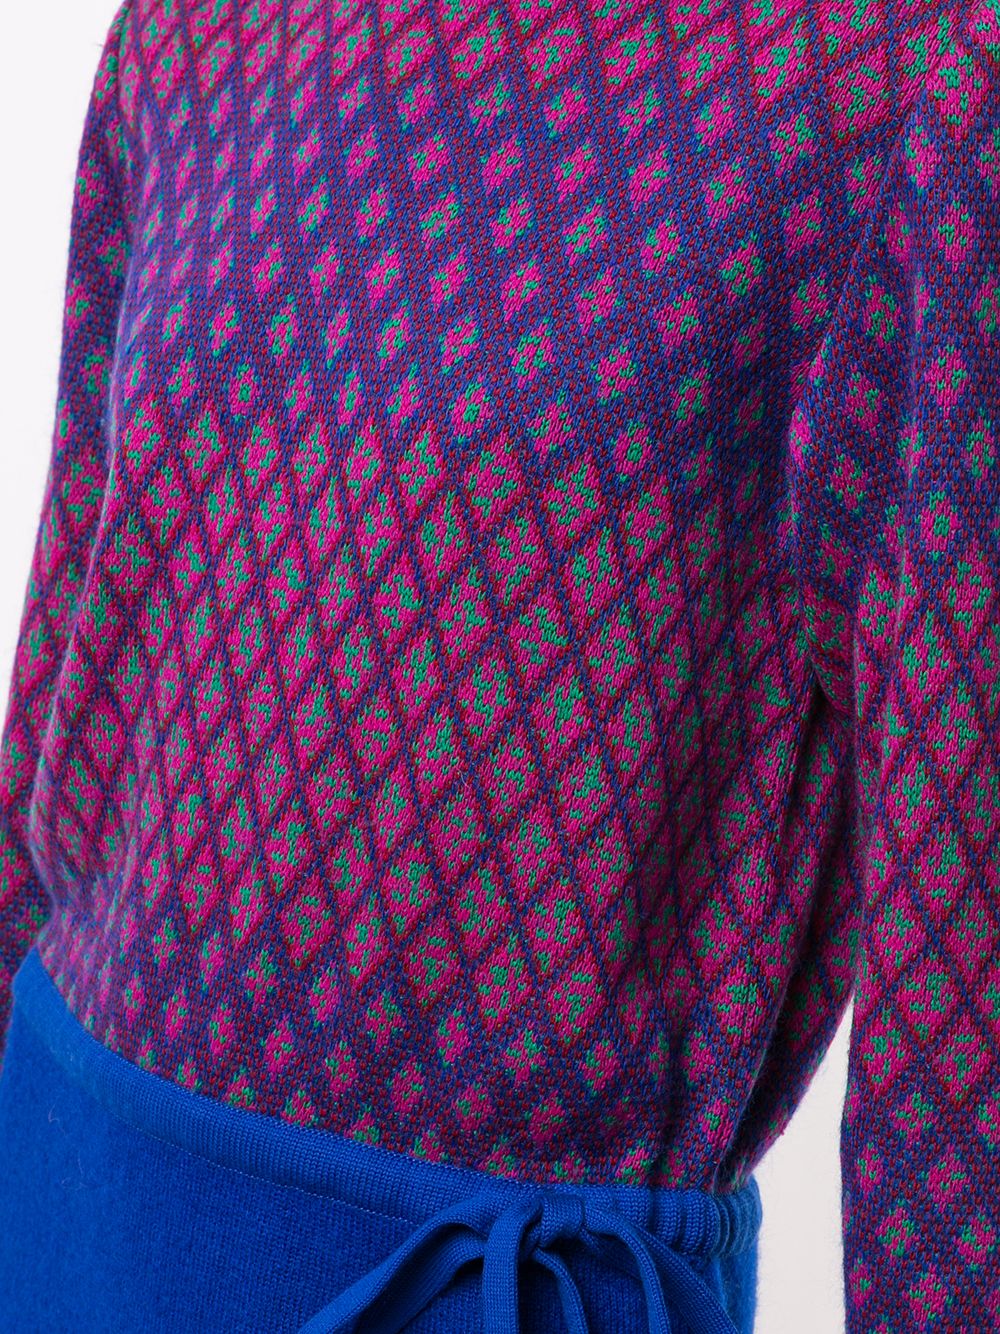 фото Yves saint laurent pre-owned платье вязки интарсия с геометричным узором